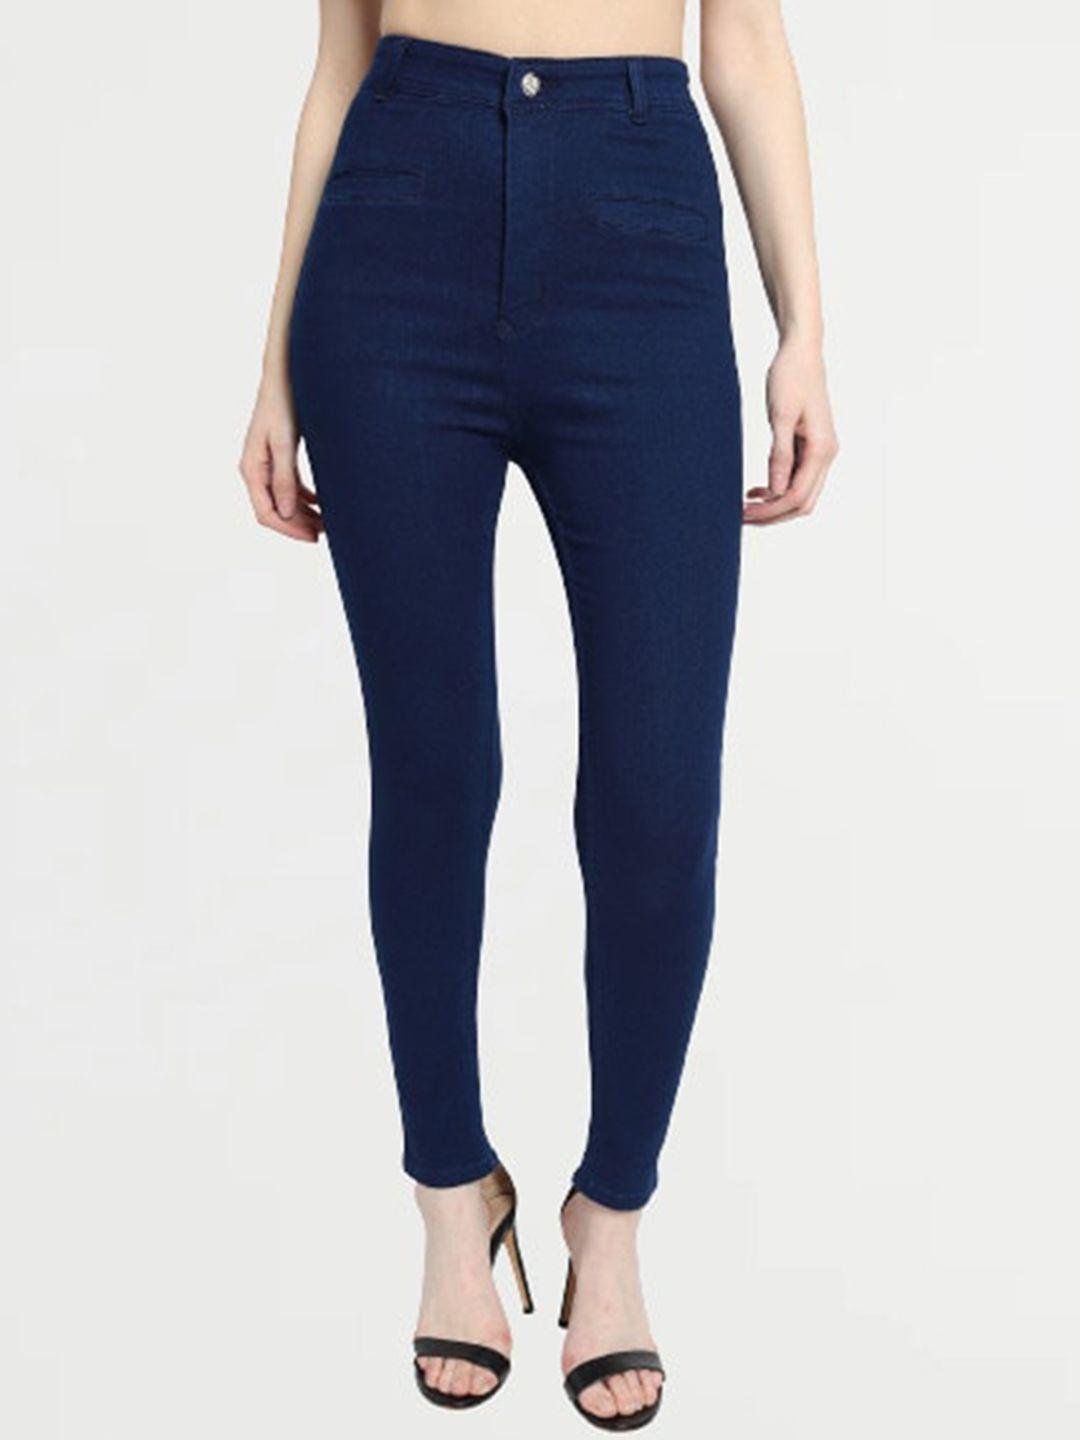 baesd women jean slim fit high-rise stretchable denim jeans